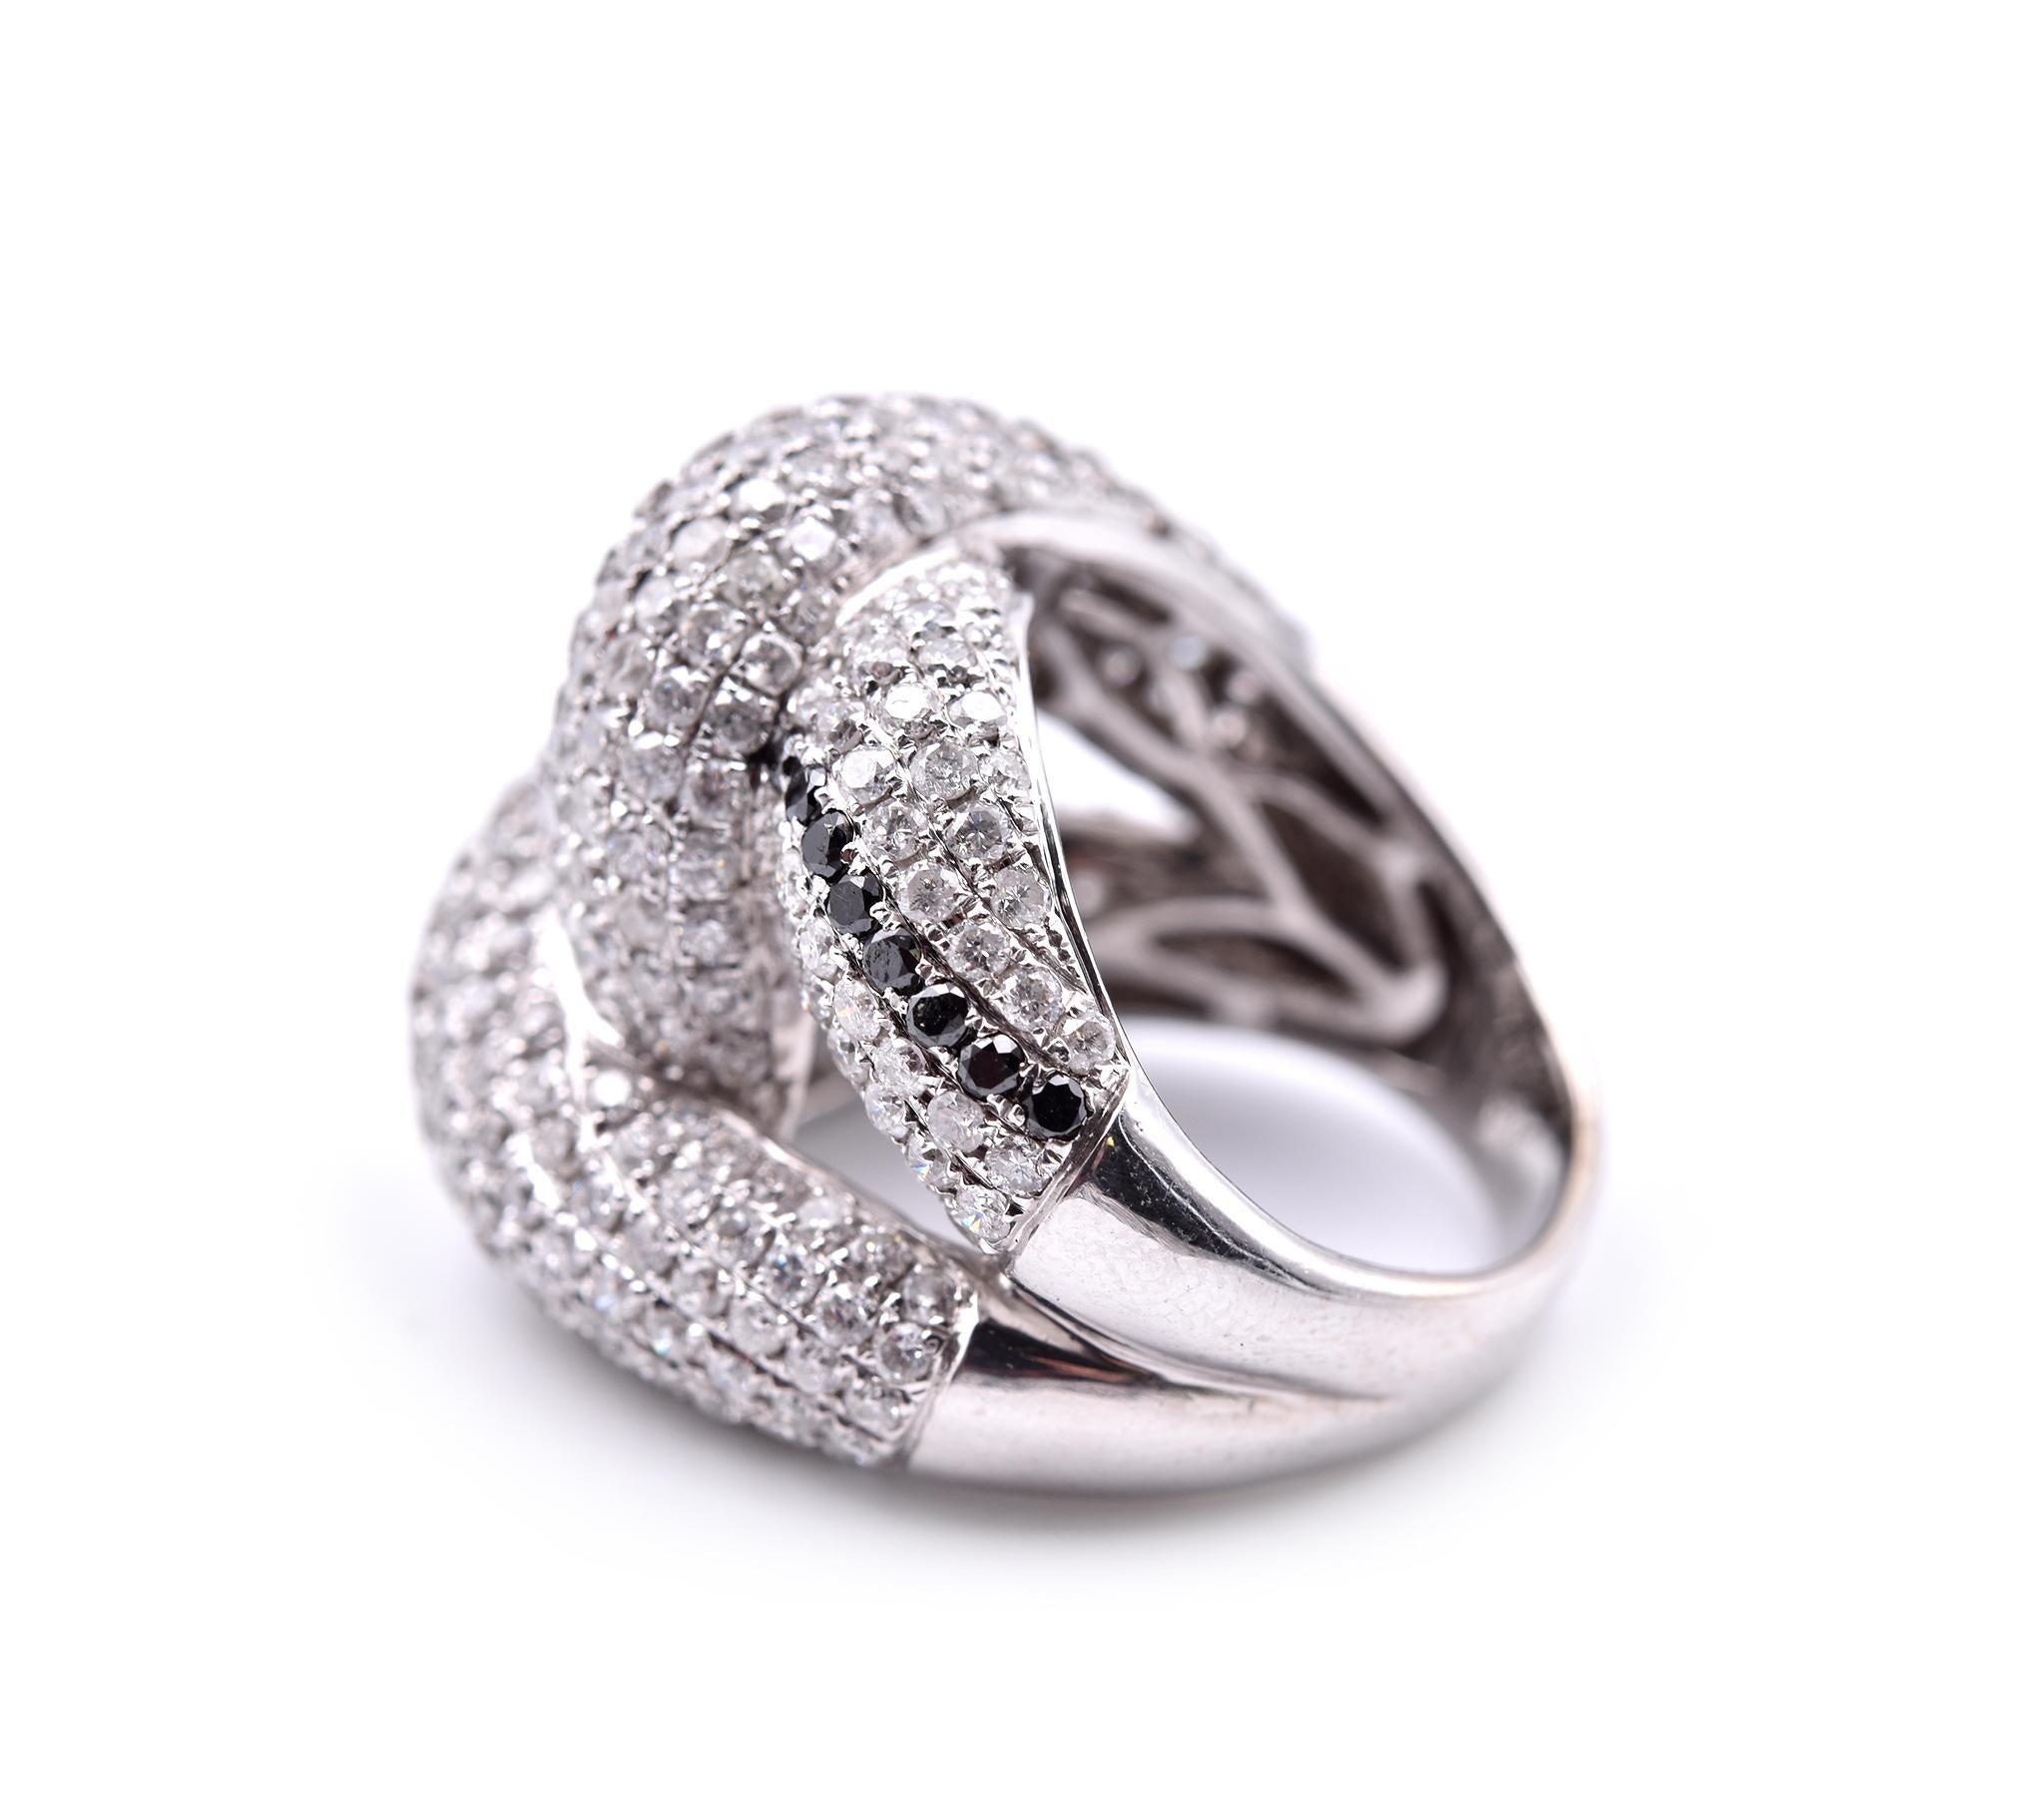 Women's 18 Karat White Gold/ White, Chocolate and Black Diamond Fashion Ring